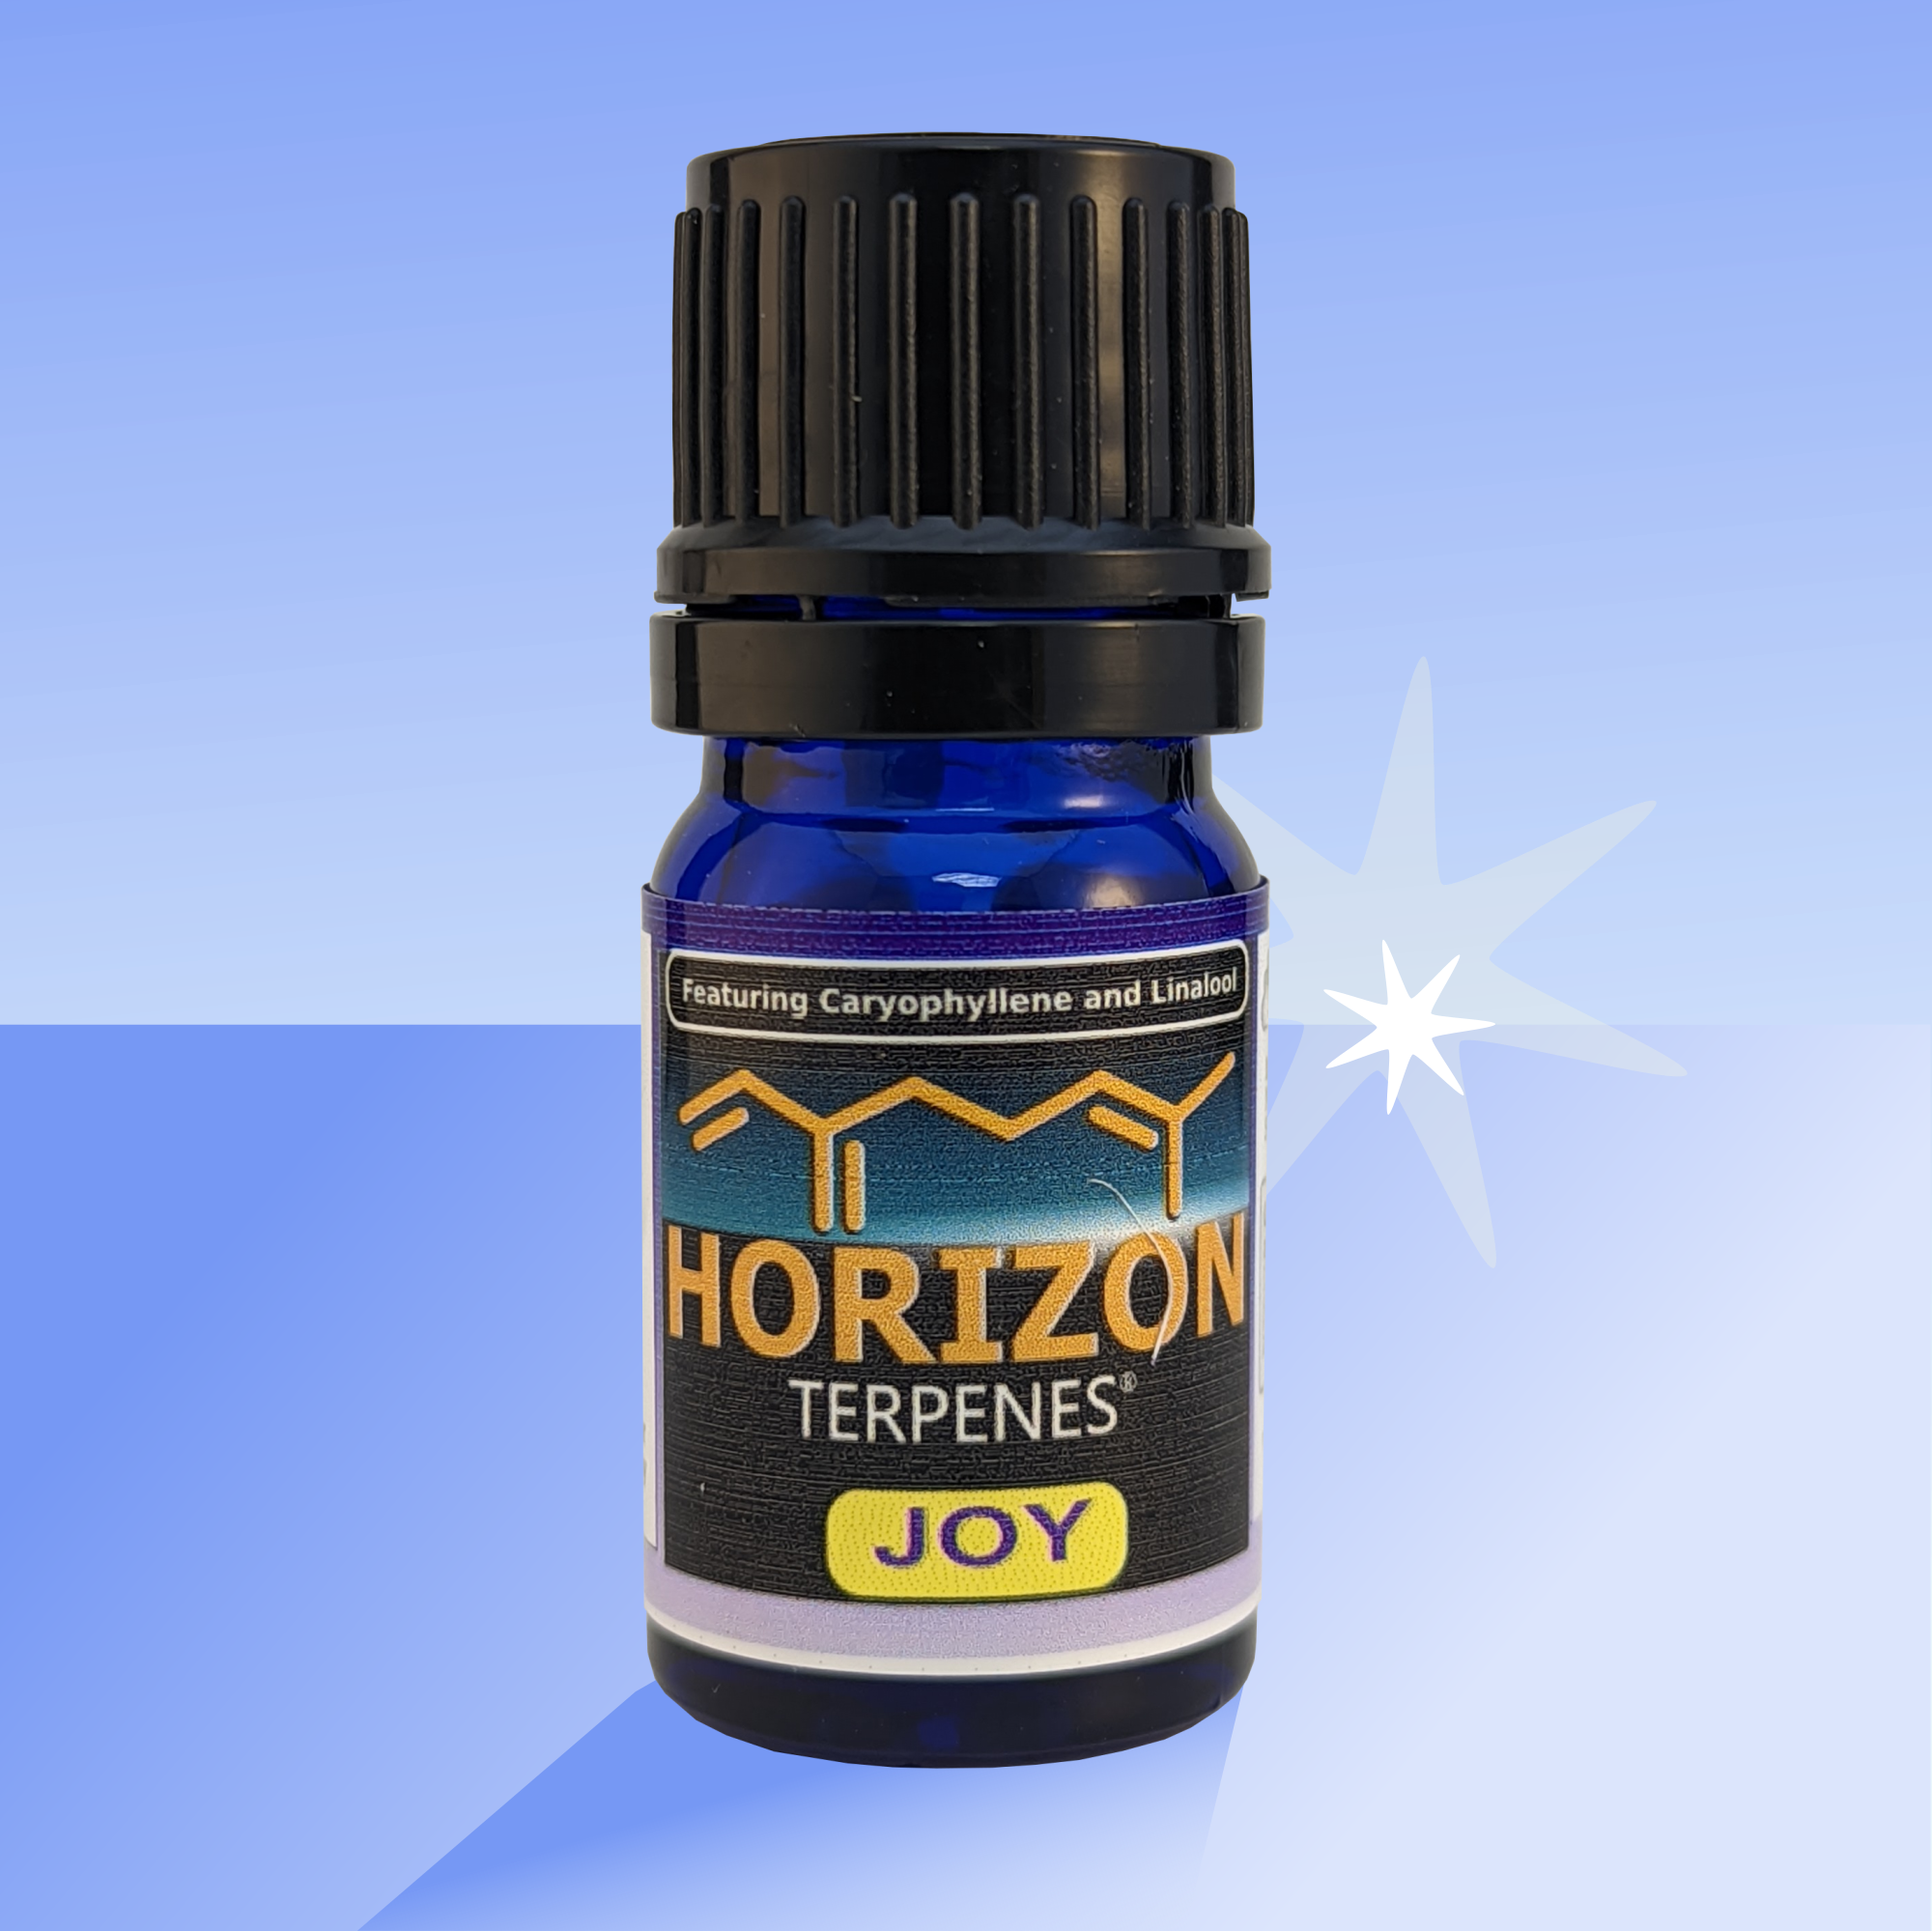 Horizon Terpenes® - Joy